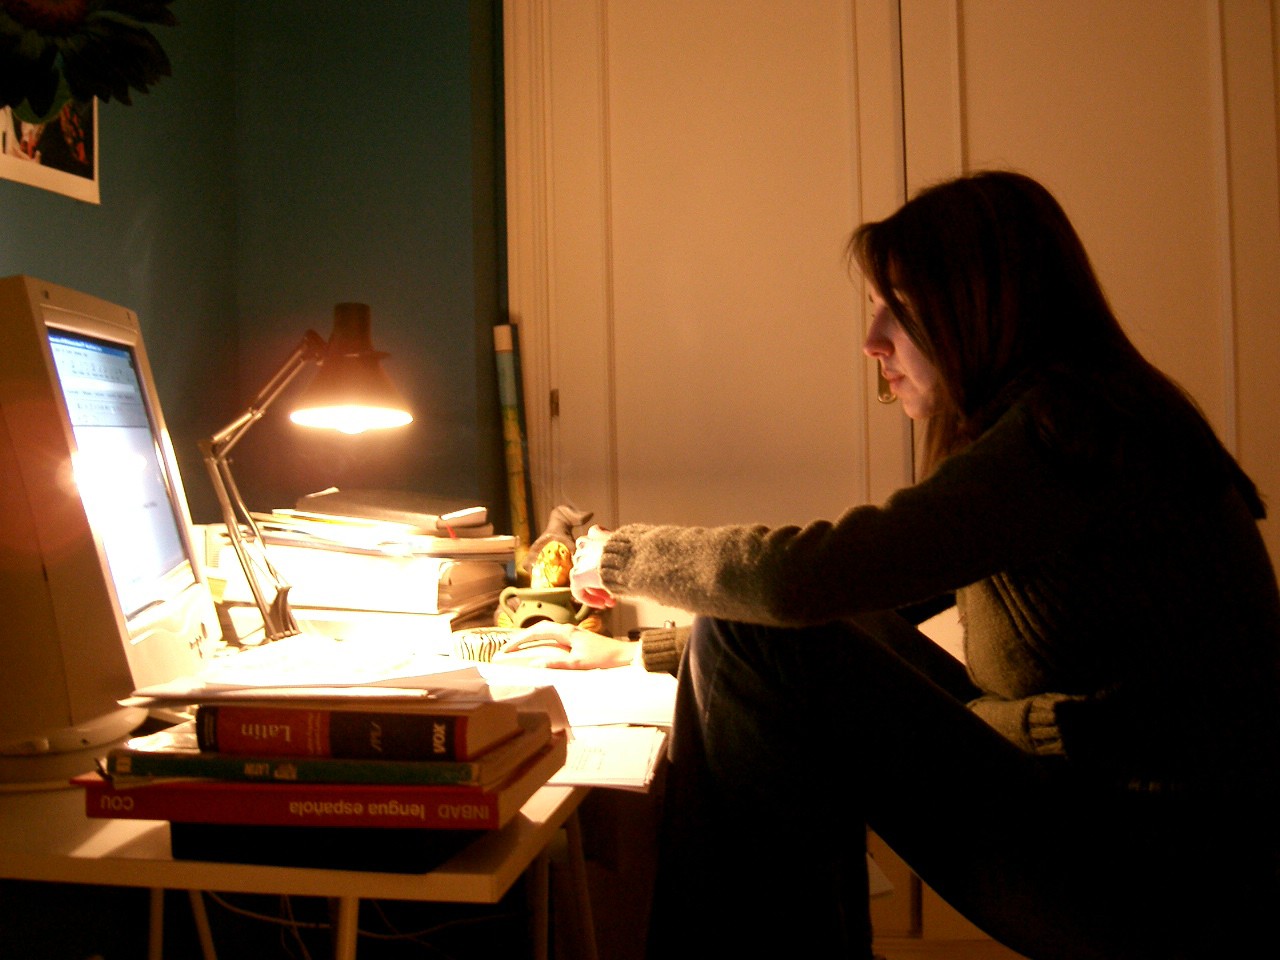 Работа вечер 3 часа. Девушка сидит за компьютером. Девочка сидит за компьютером. Человек перед компьютером. Сидит за компьютером ночью.